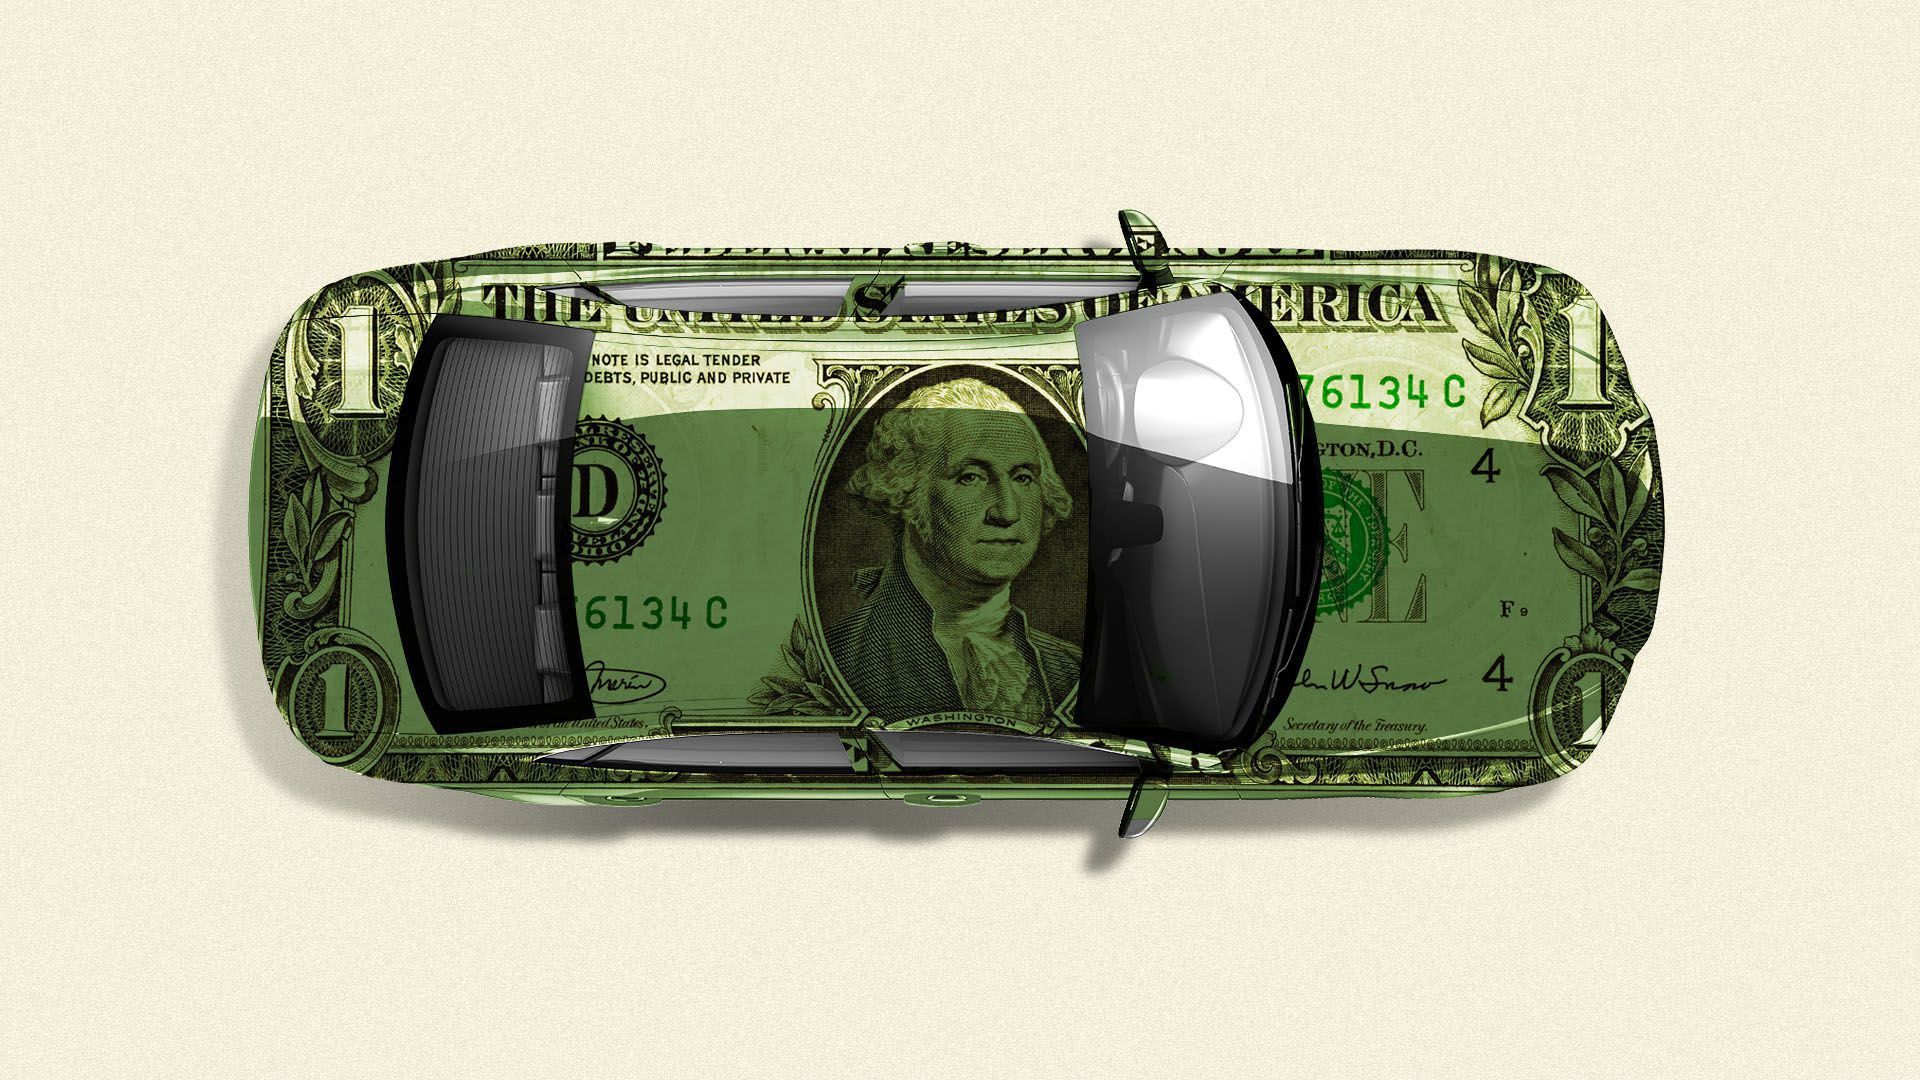 Illustration of a $1 bill on a car.